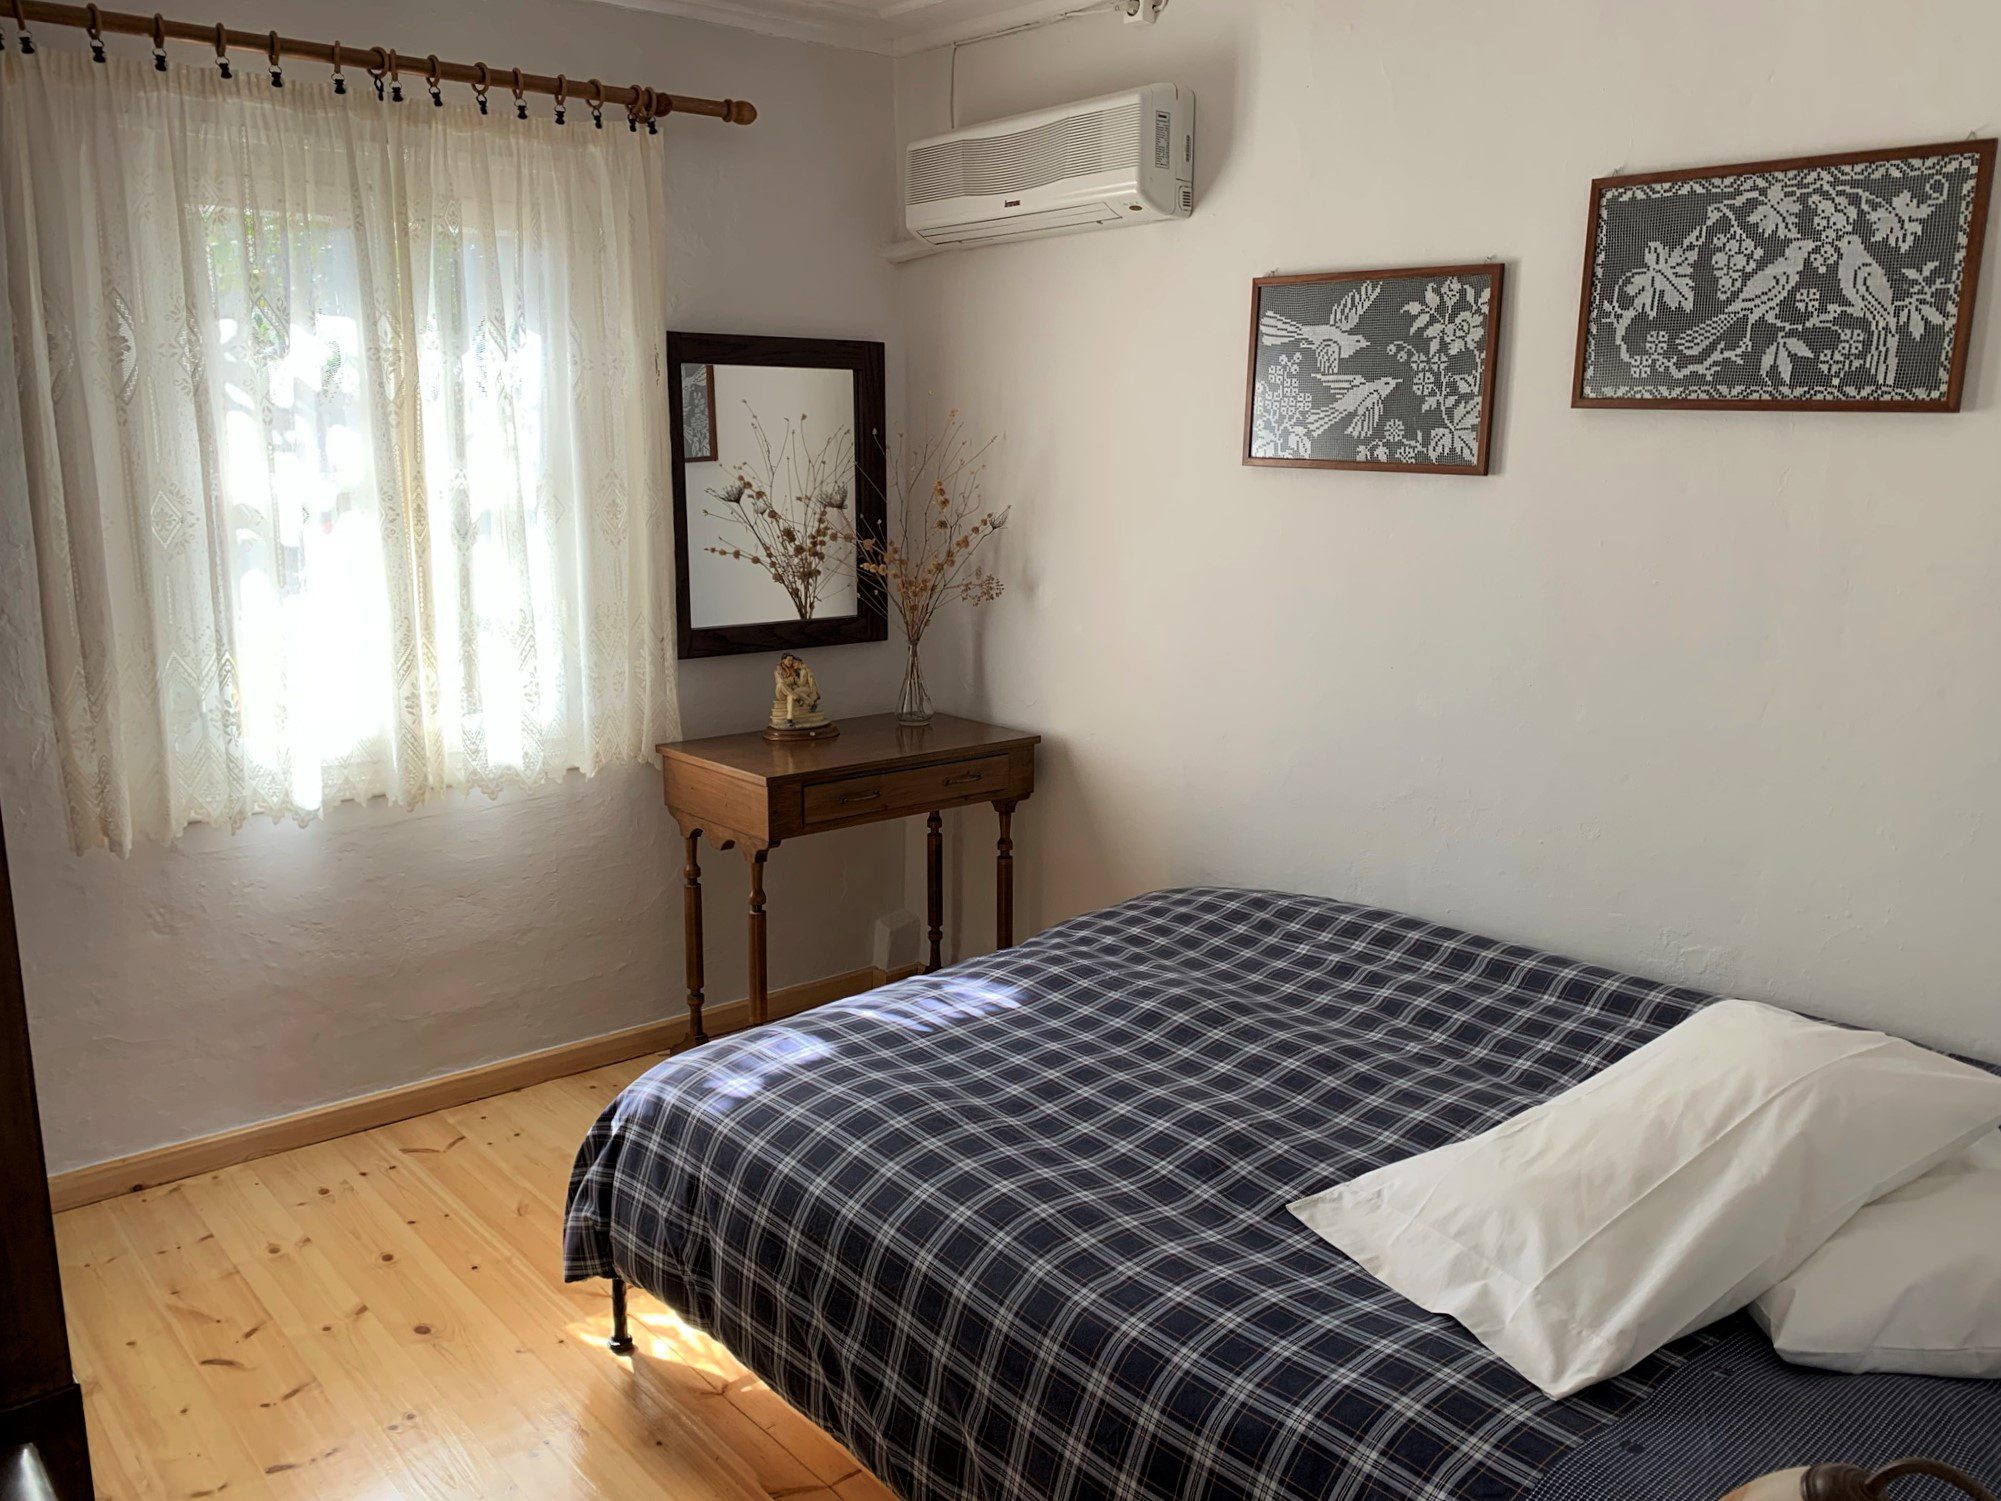 Bedroom of house to rent in Ithaca Greece, Kioni